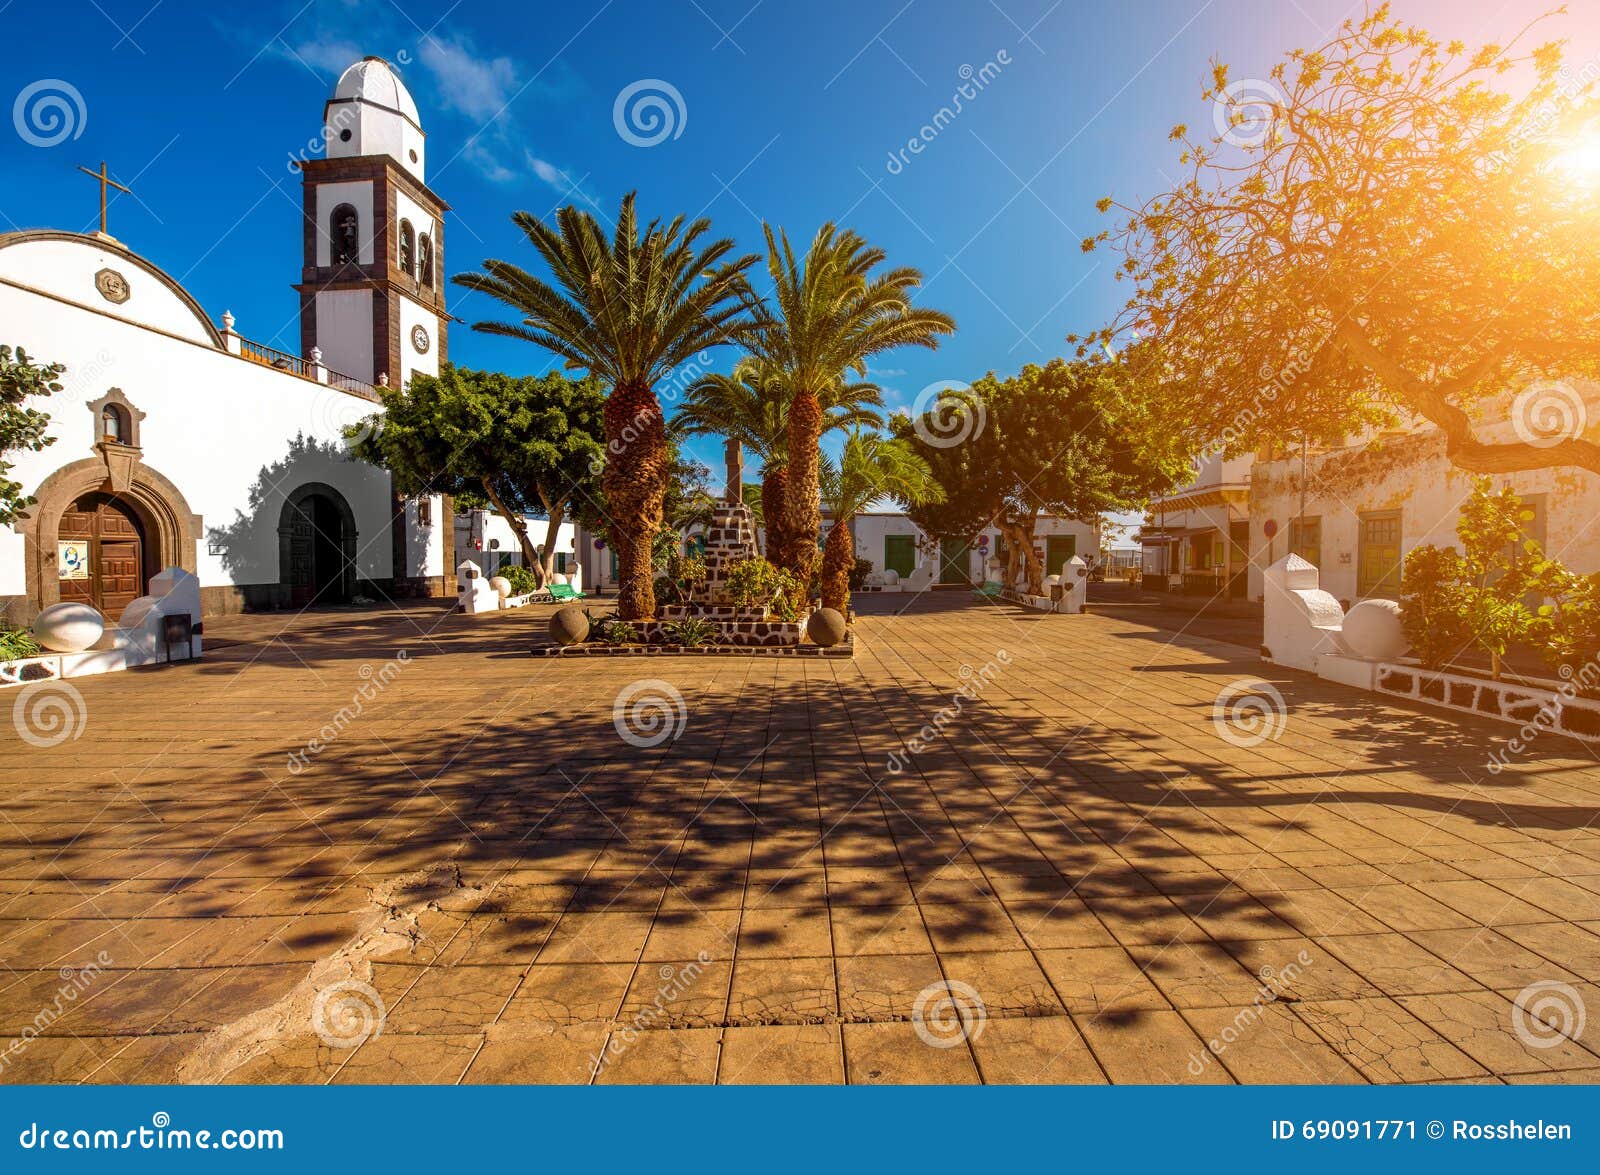 san gines church in arrecife city on lanzarote island